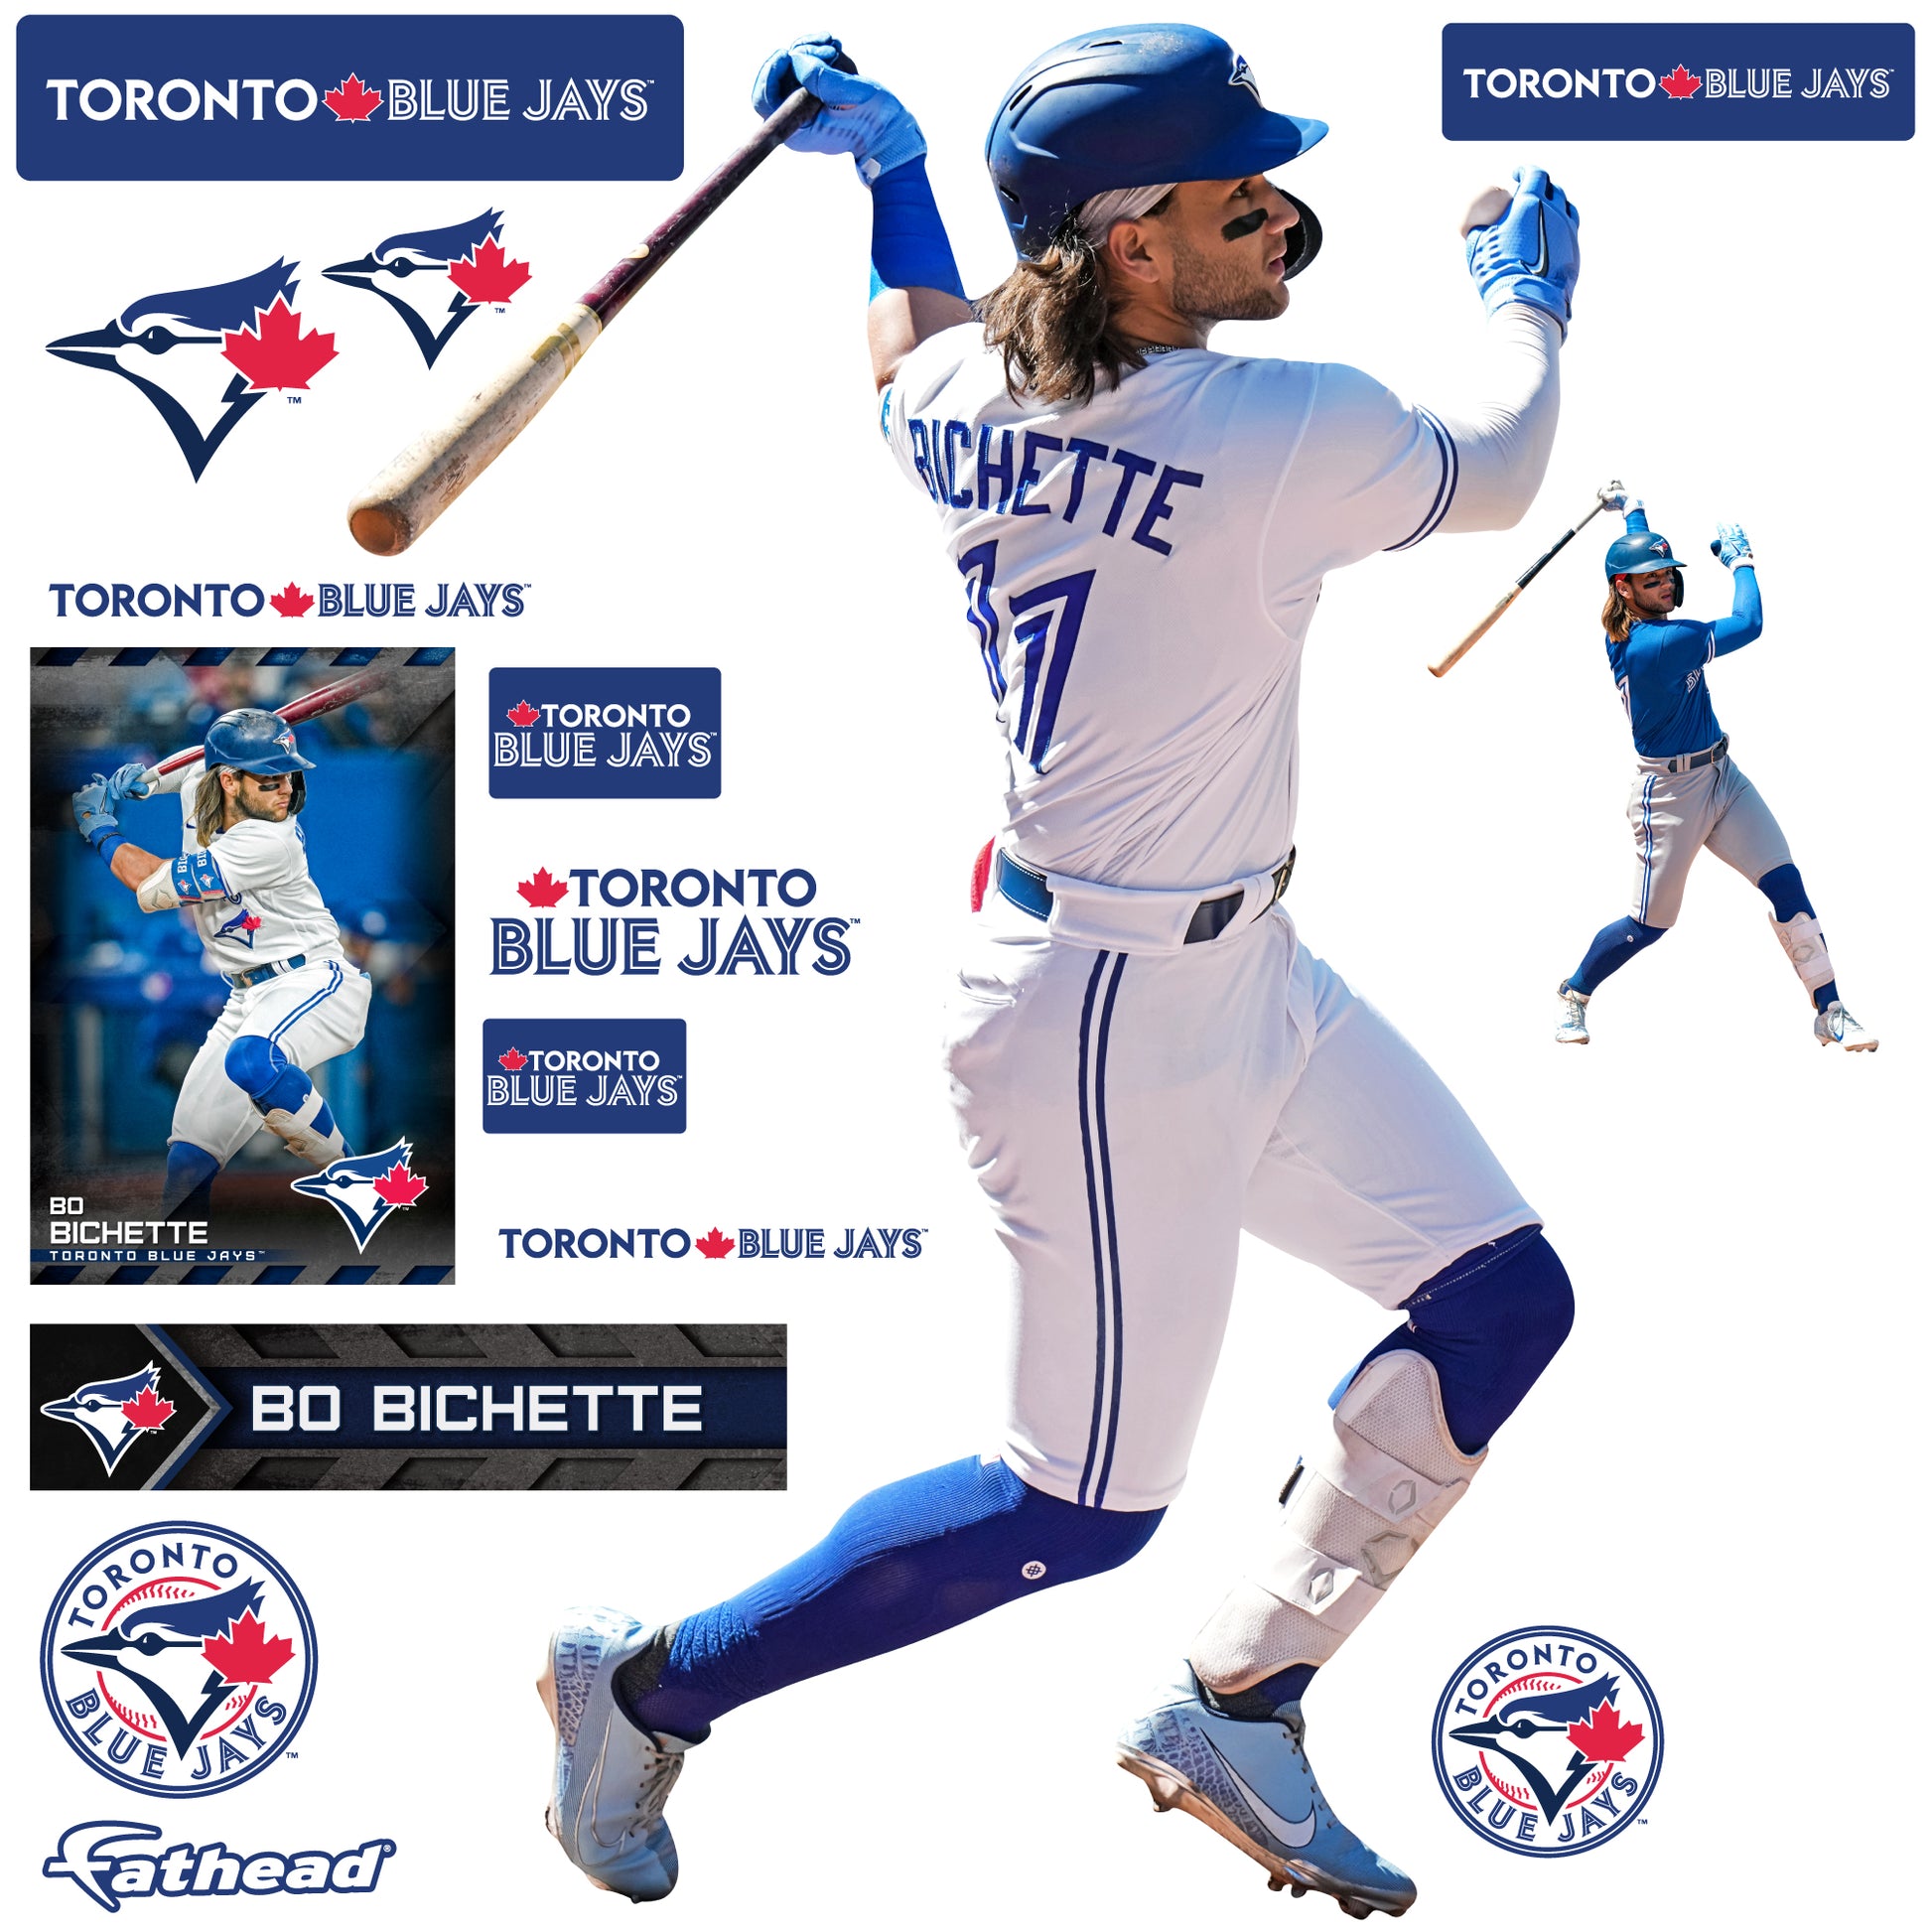 Toronto Blue Jays Baseball Memorabilia & MLB Merchandise